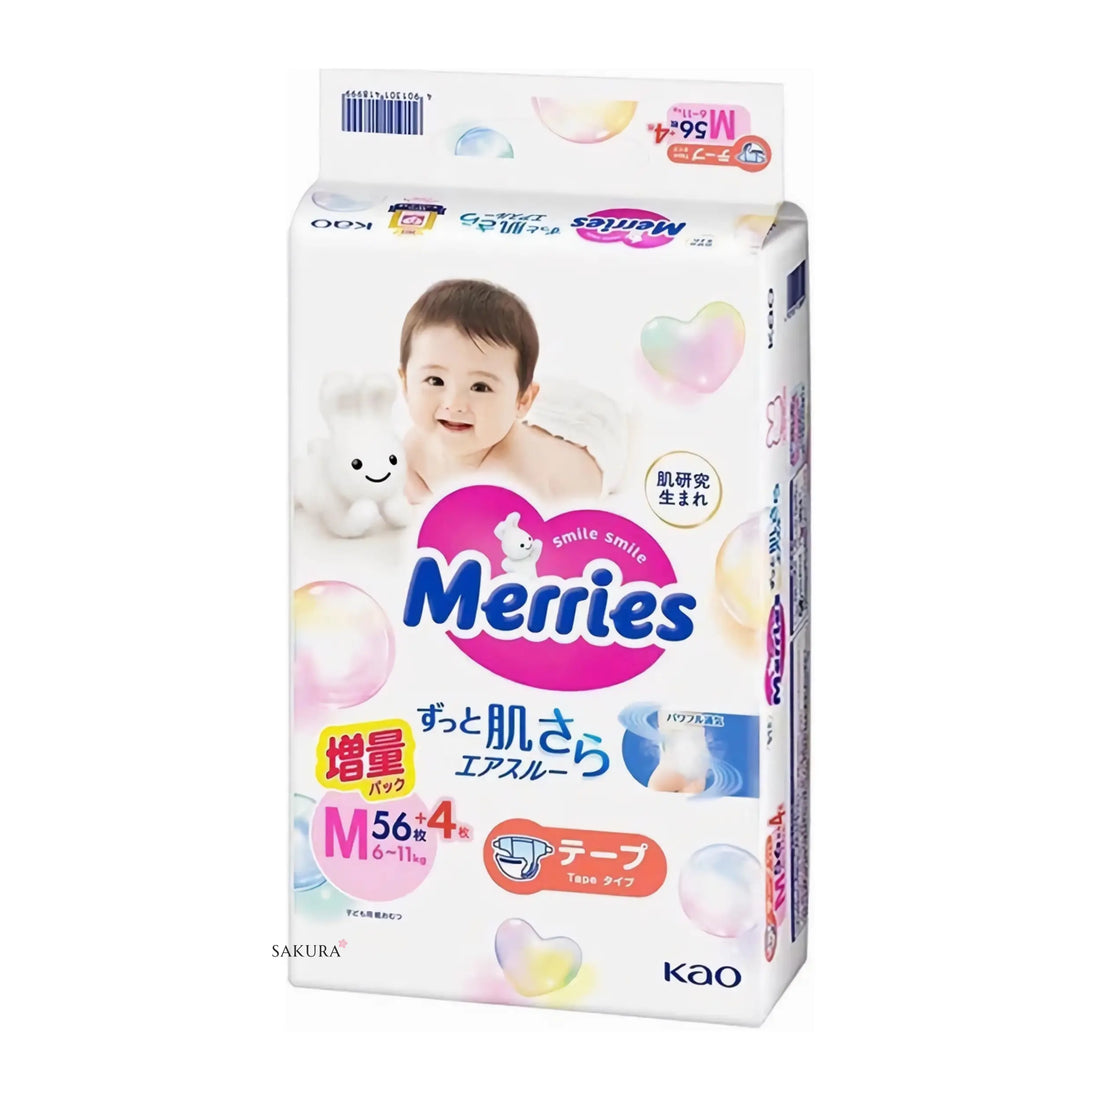 Merries Nappies JAPAN Tape M (6-11kg) 60pcs Value Pack